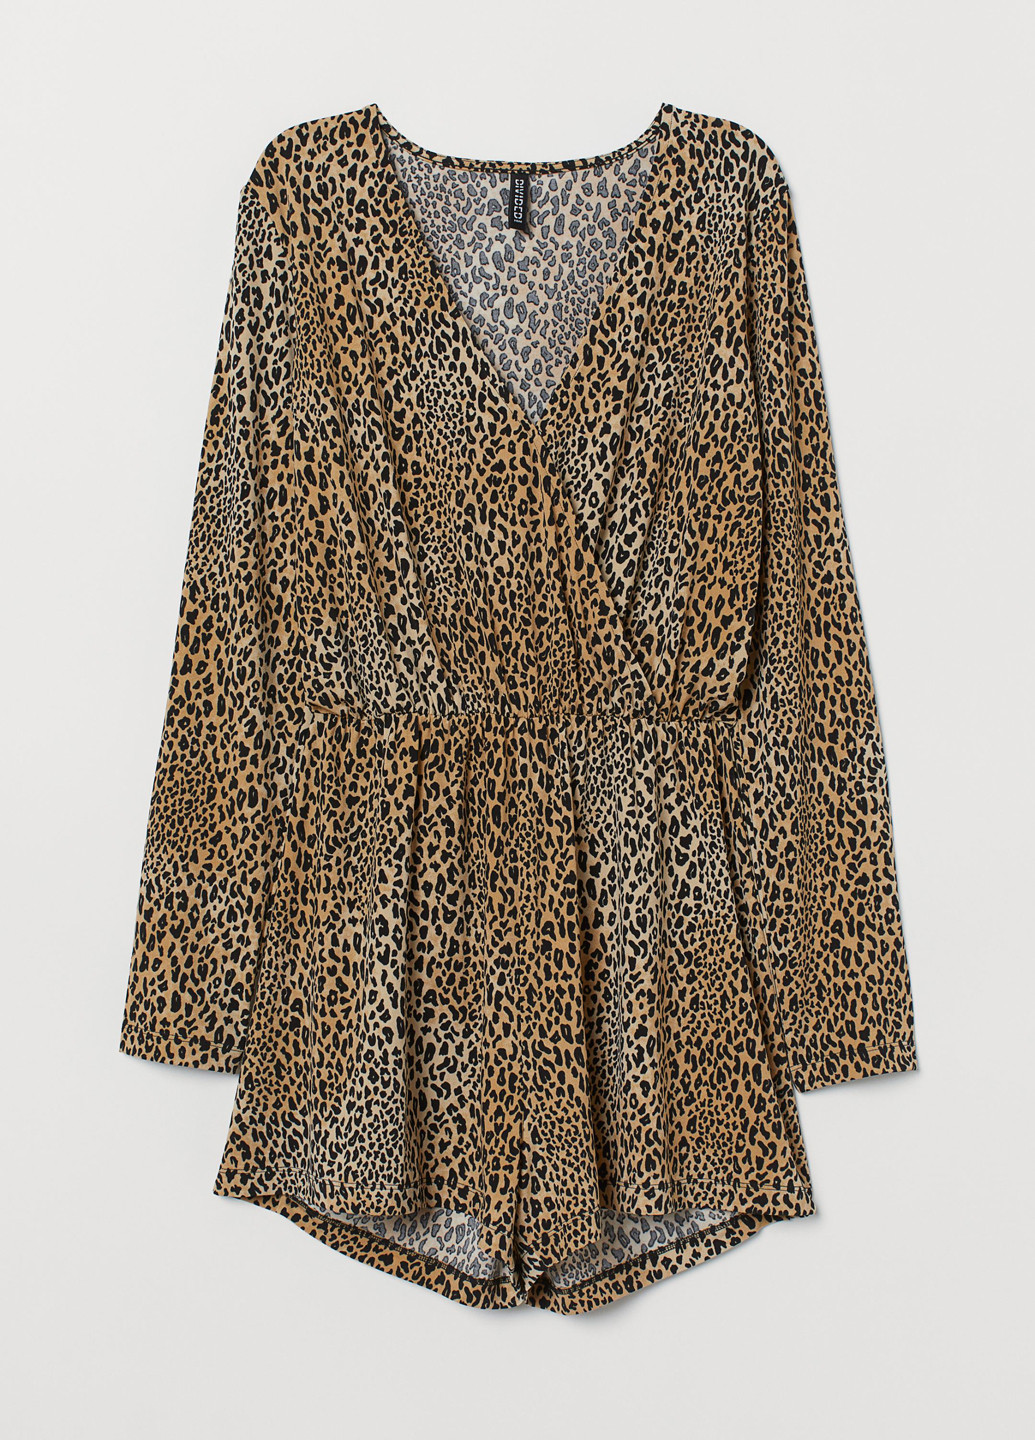 Комбинезон H&M комбинезон-шорты леопардовый бежевый кэжуал полиэстер